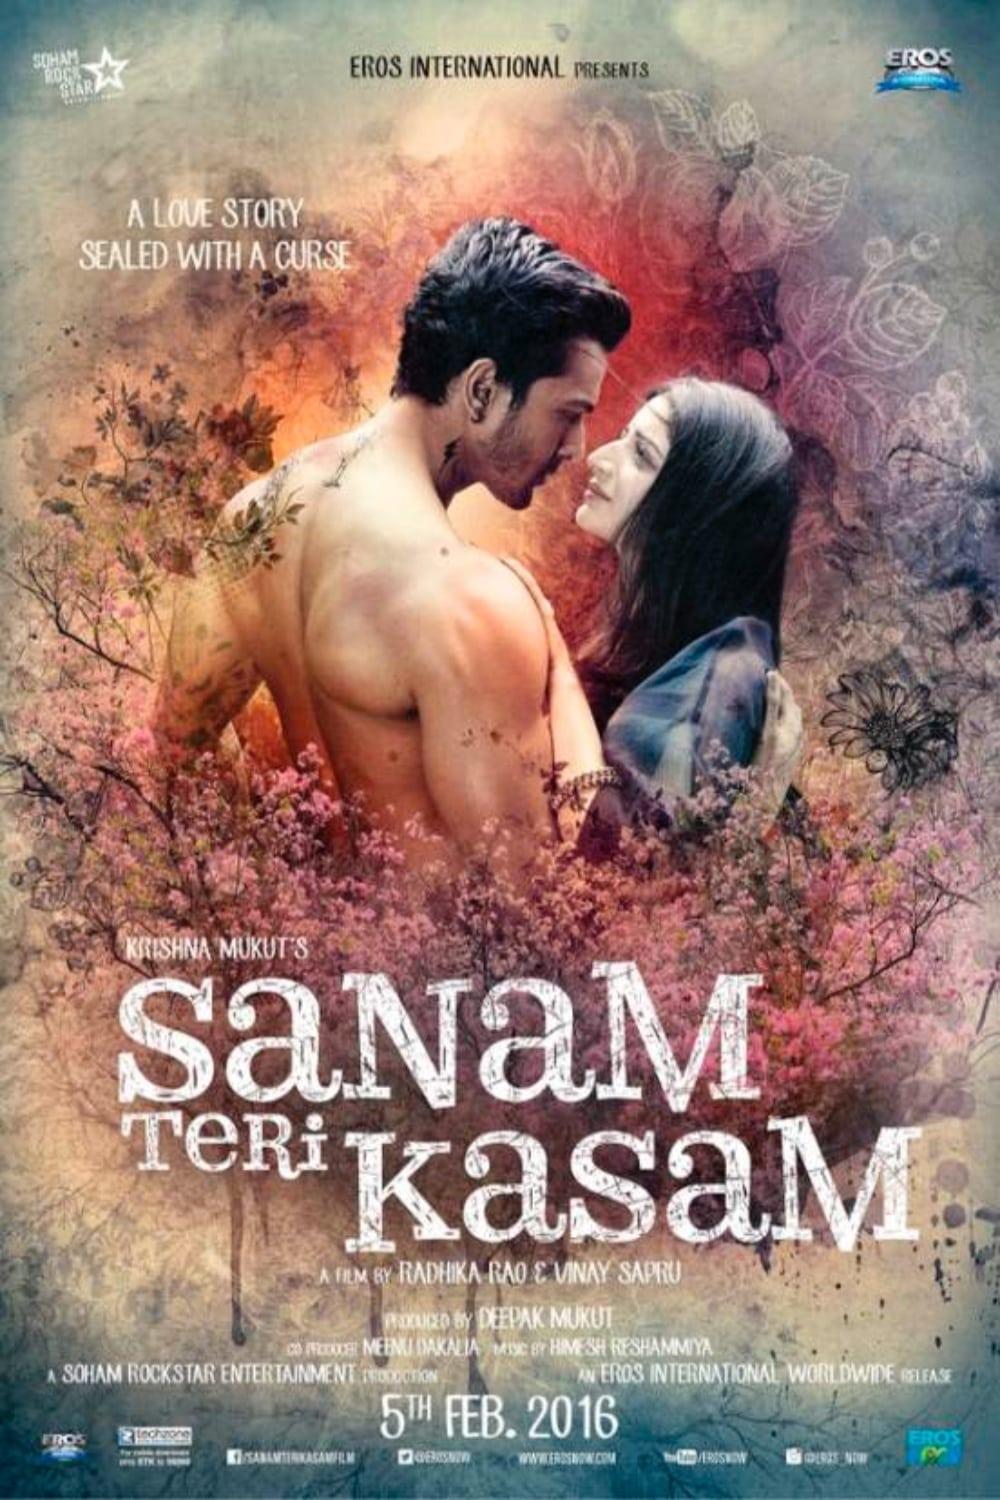 Sanam Teri Kasam poster